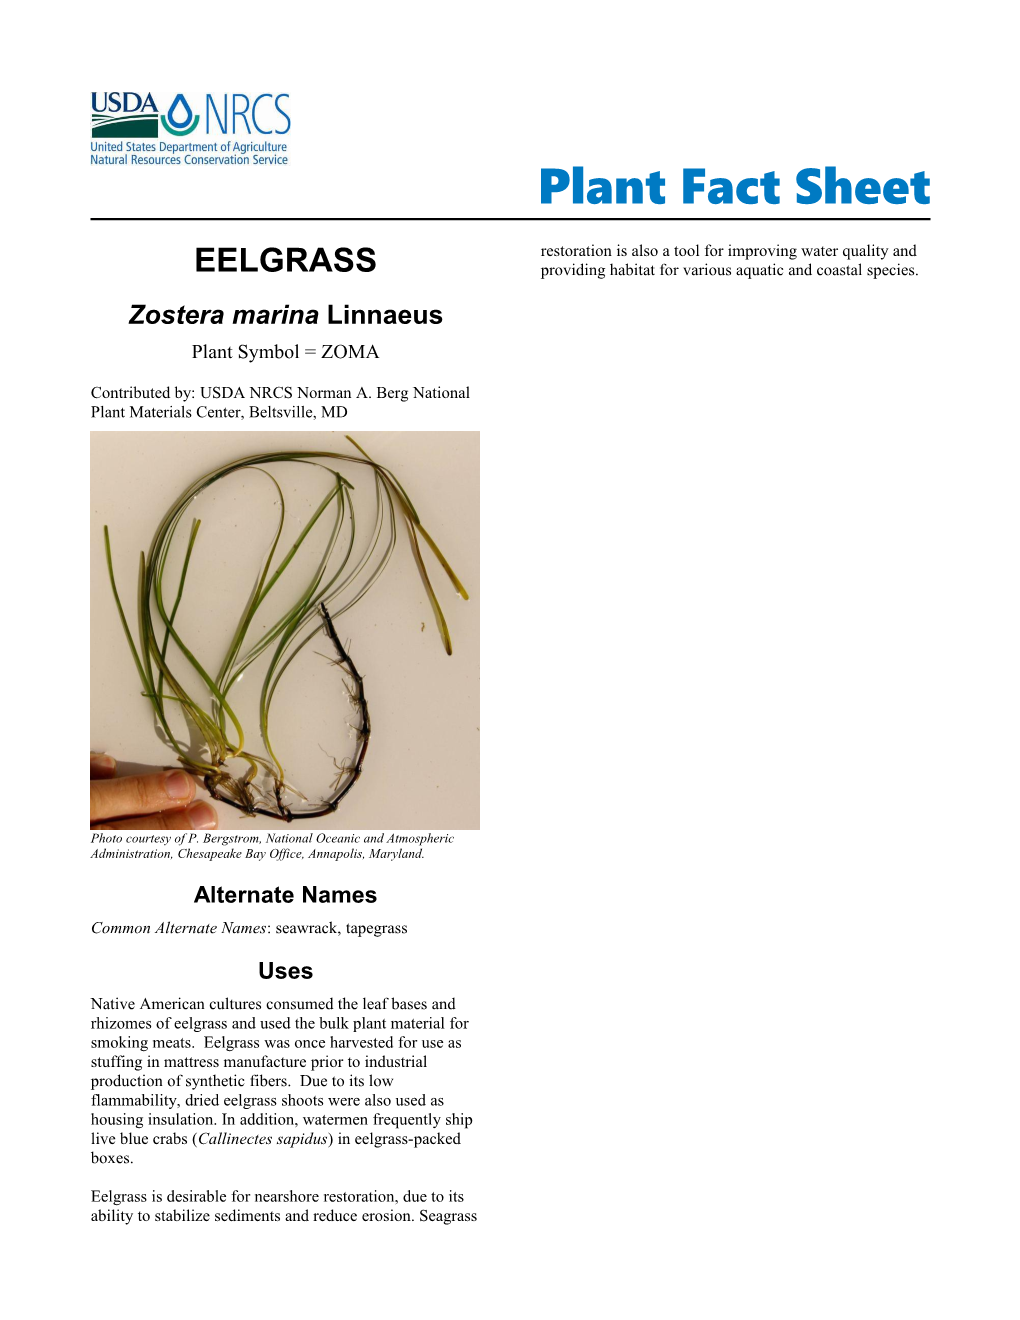 Eelgrass (Zostera Marina Linnaeus)